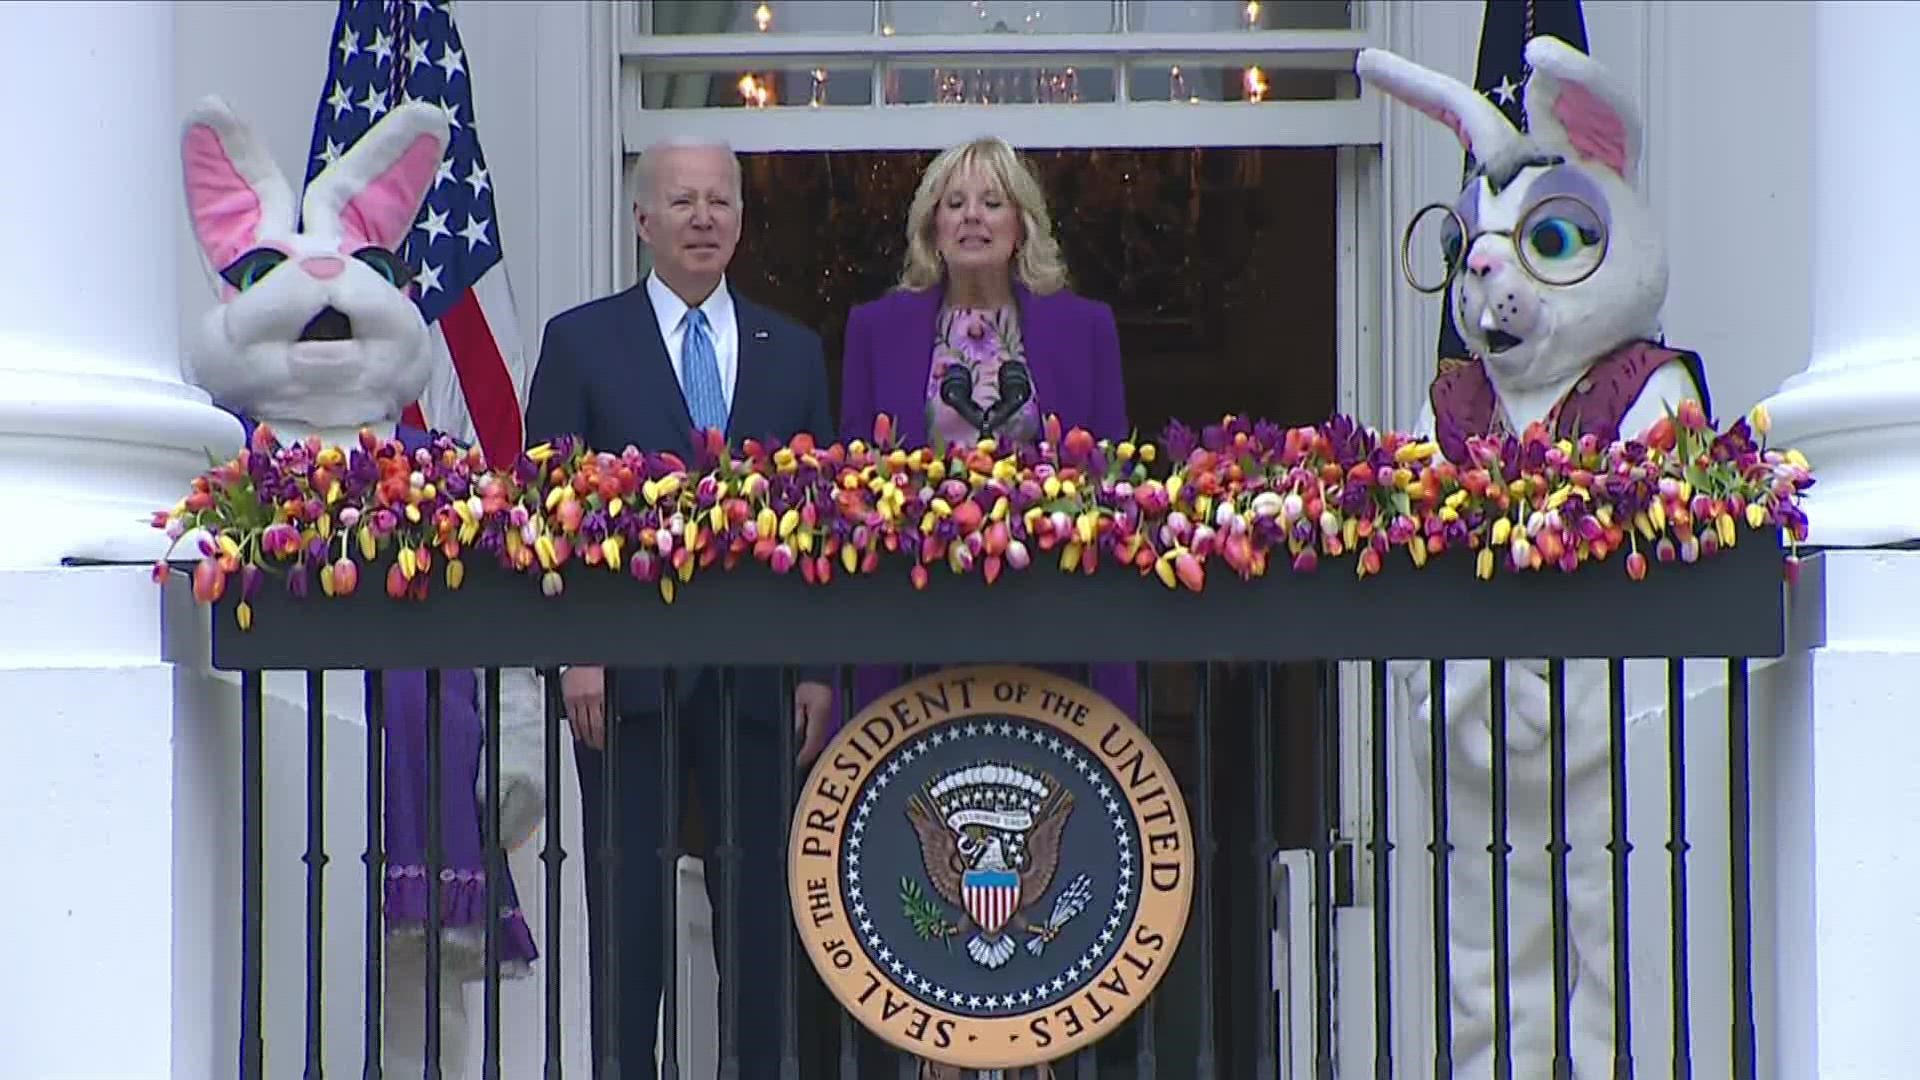 White House Easter Egg Roll returns, first such event for Biden